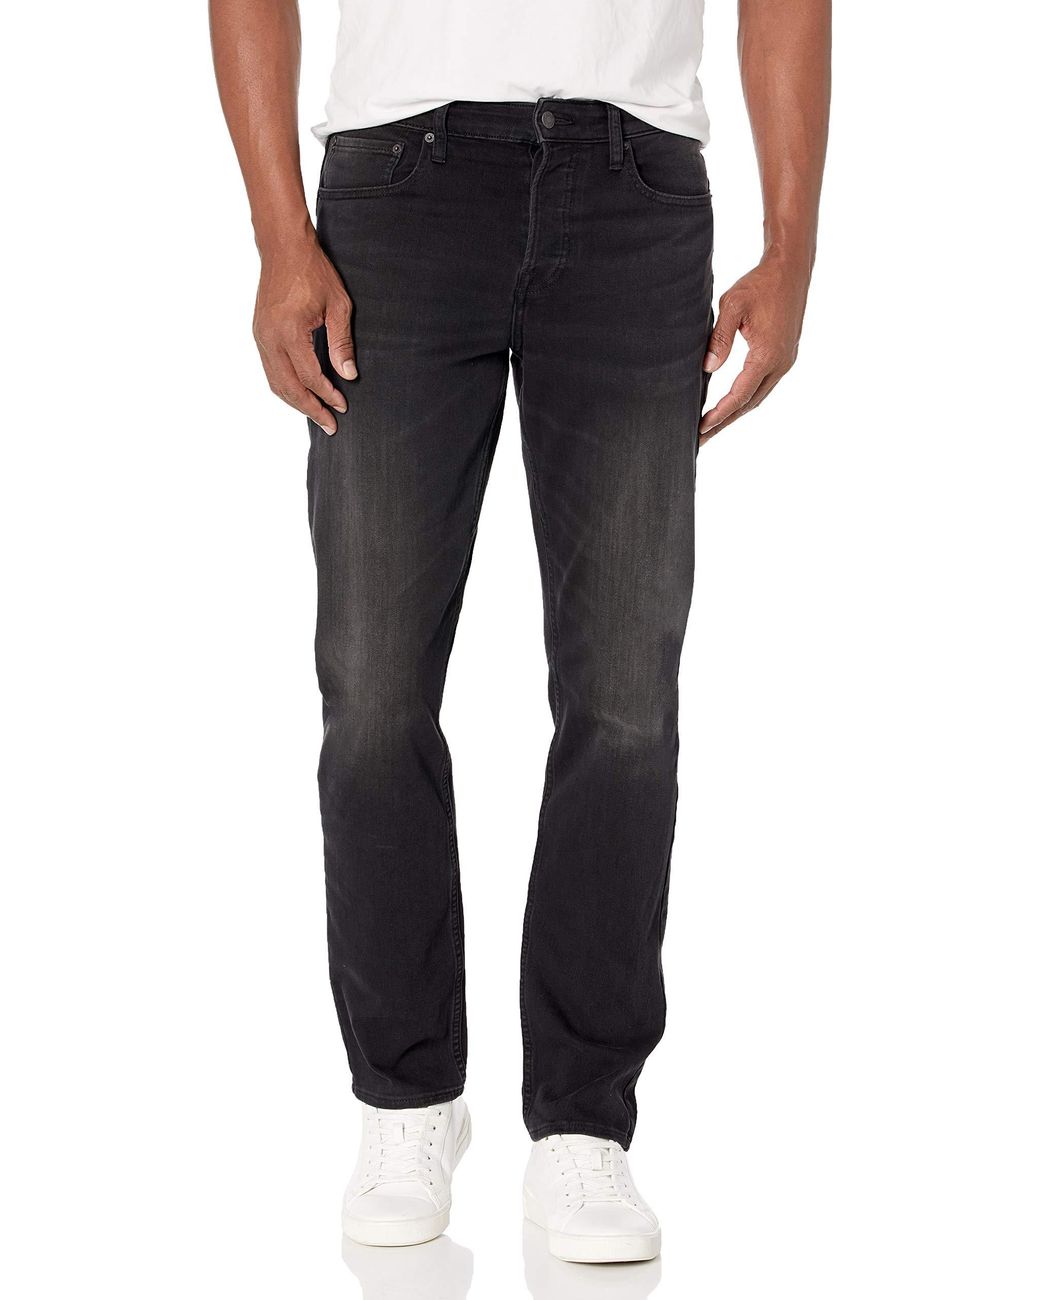 Calvin Klein Denim Slim-fit Jeans in Black for Men - Lyst